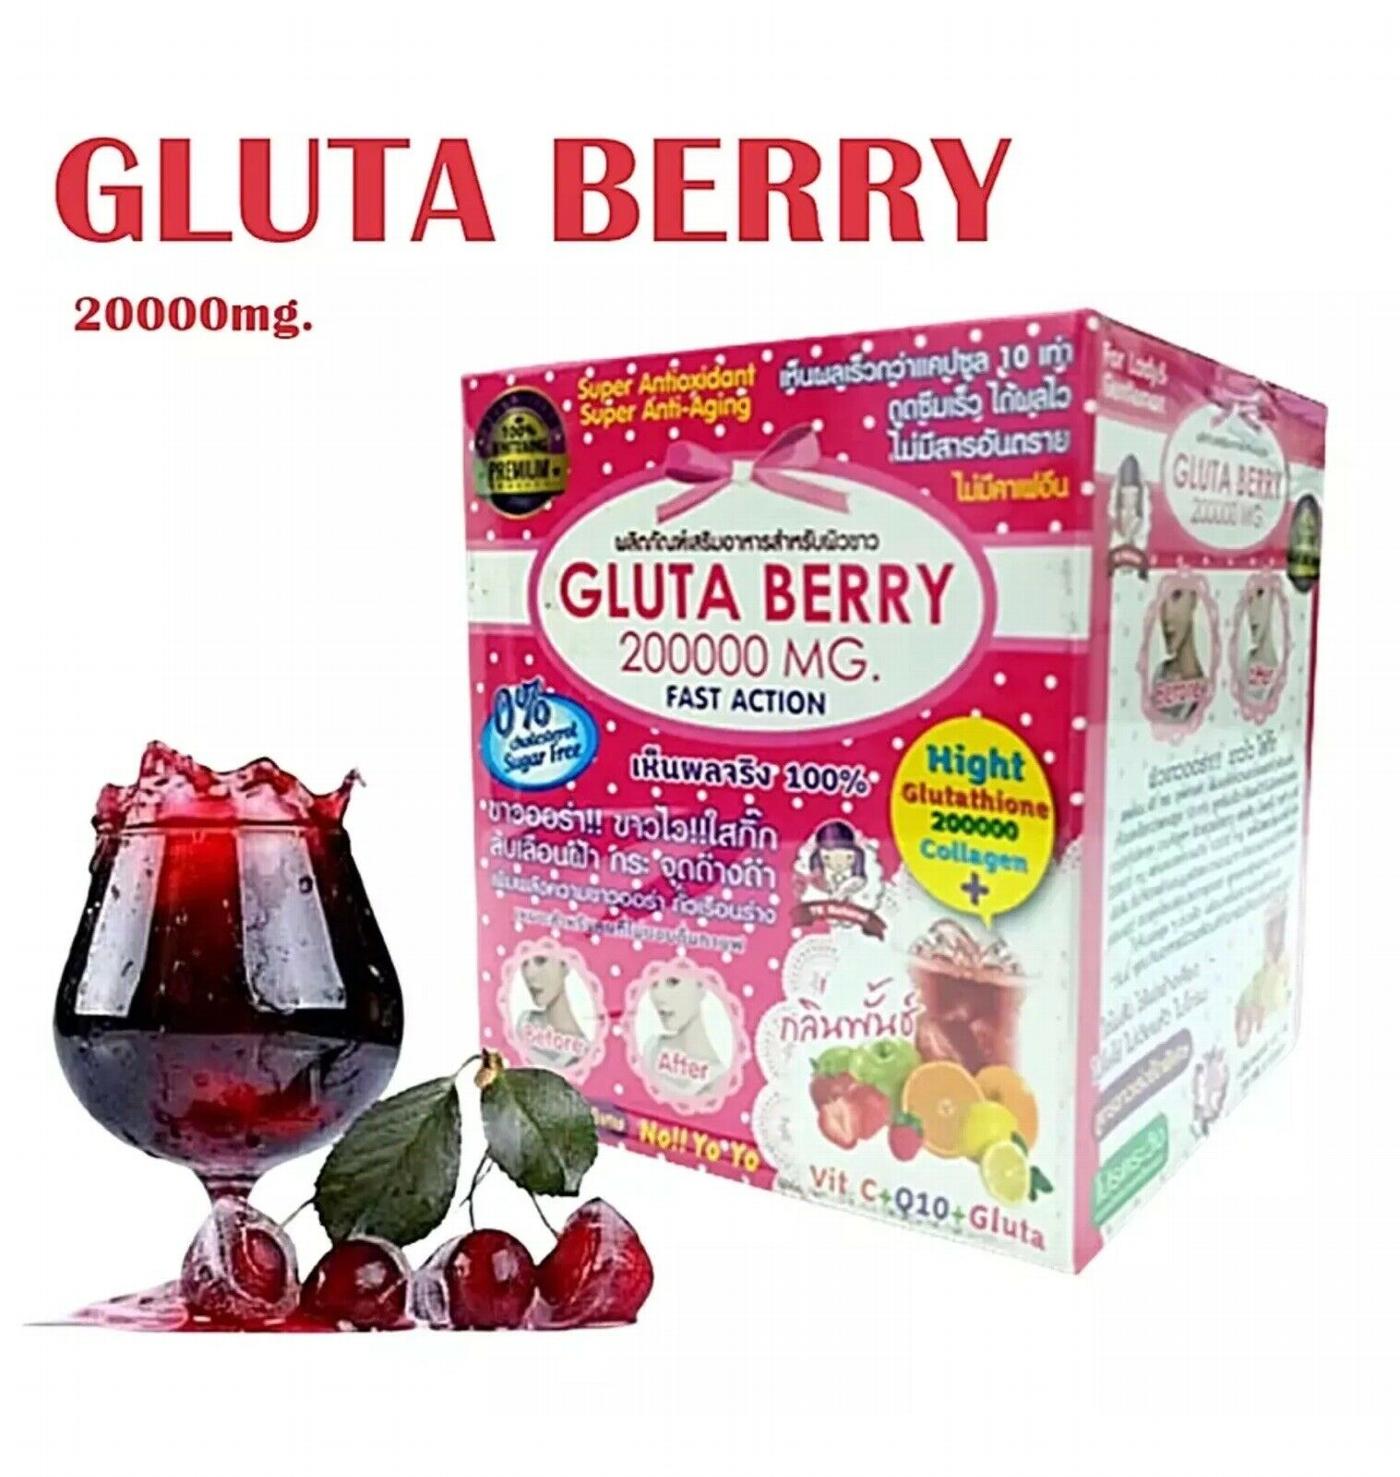 Gluta Berry 200000 mg Drink Punch, Skin Whitening, Anti-Aging